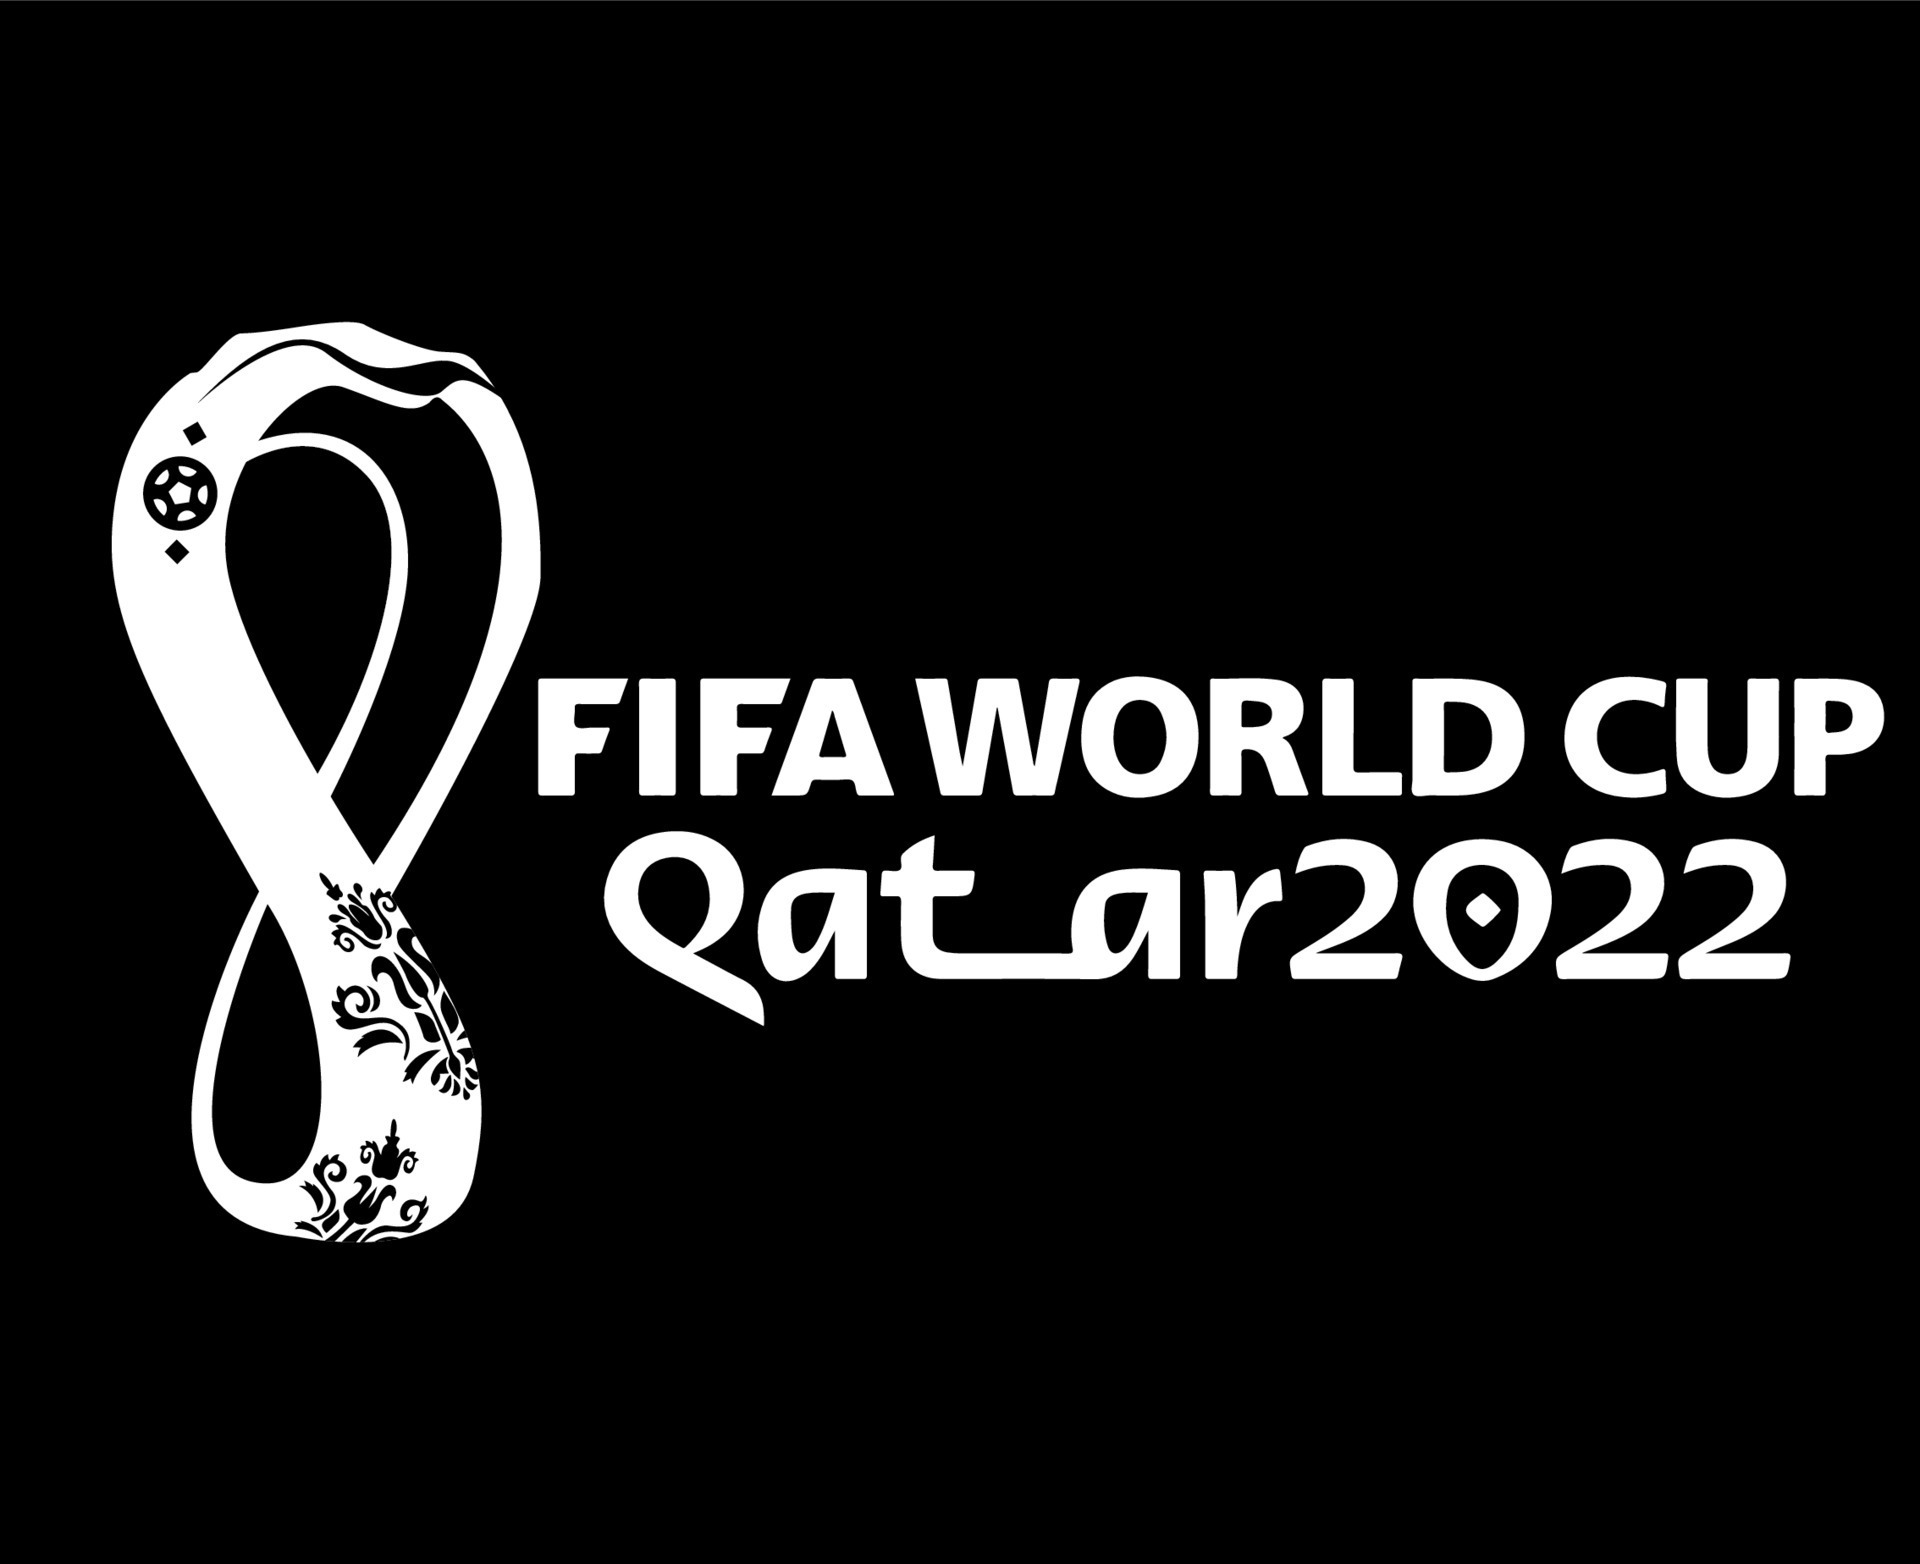 fifa world cup 2022 logo